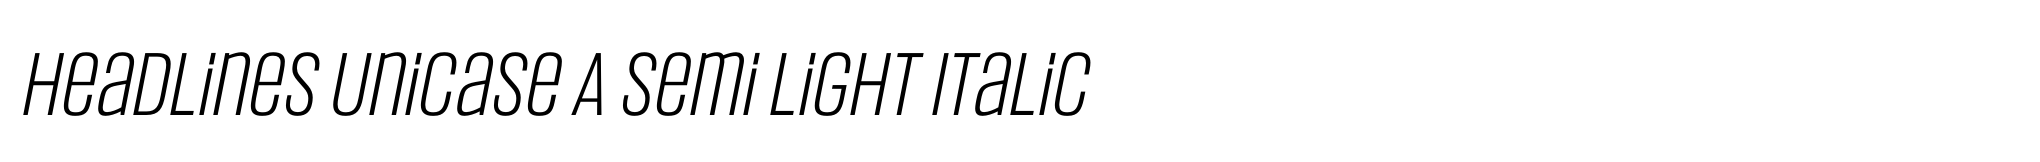 Headlines Unicase A Semi Light Italic image